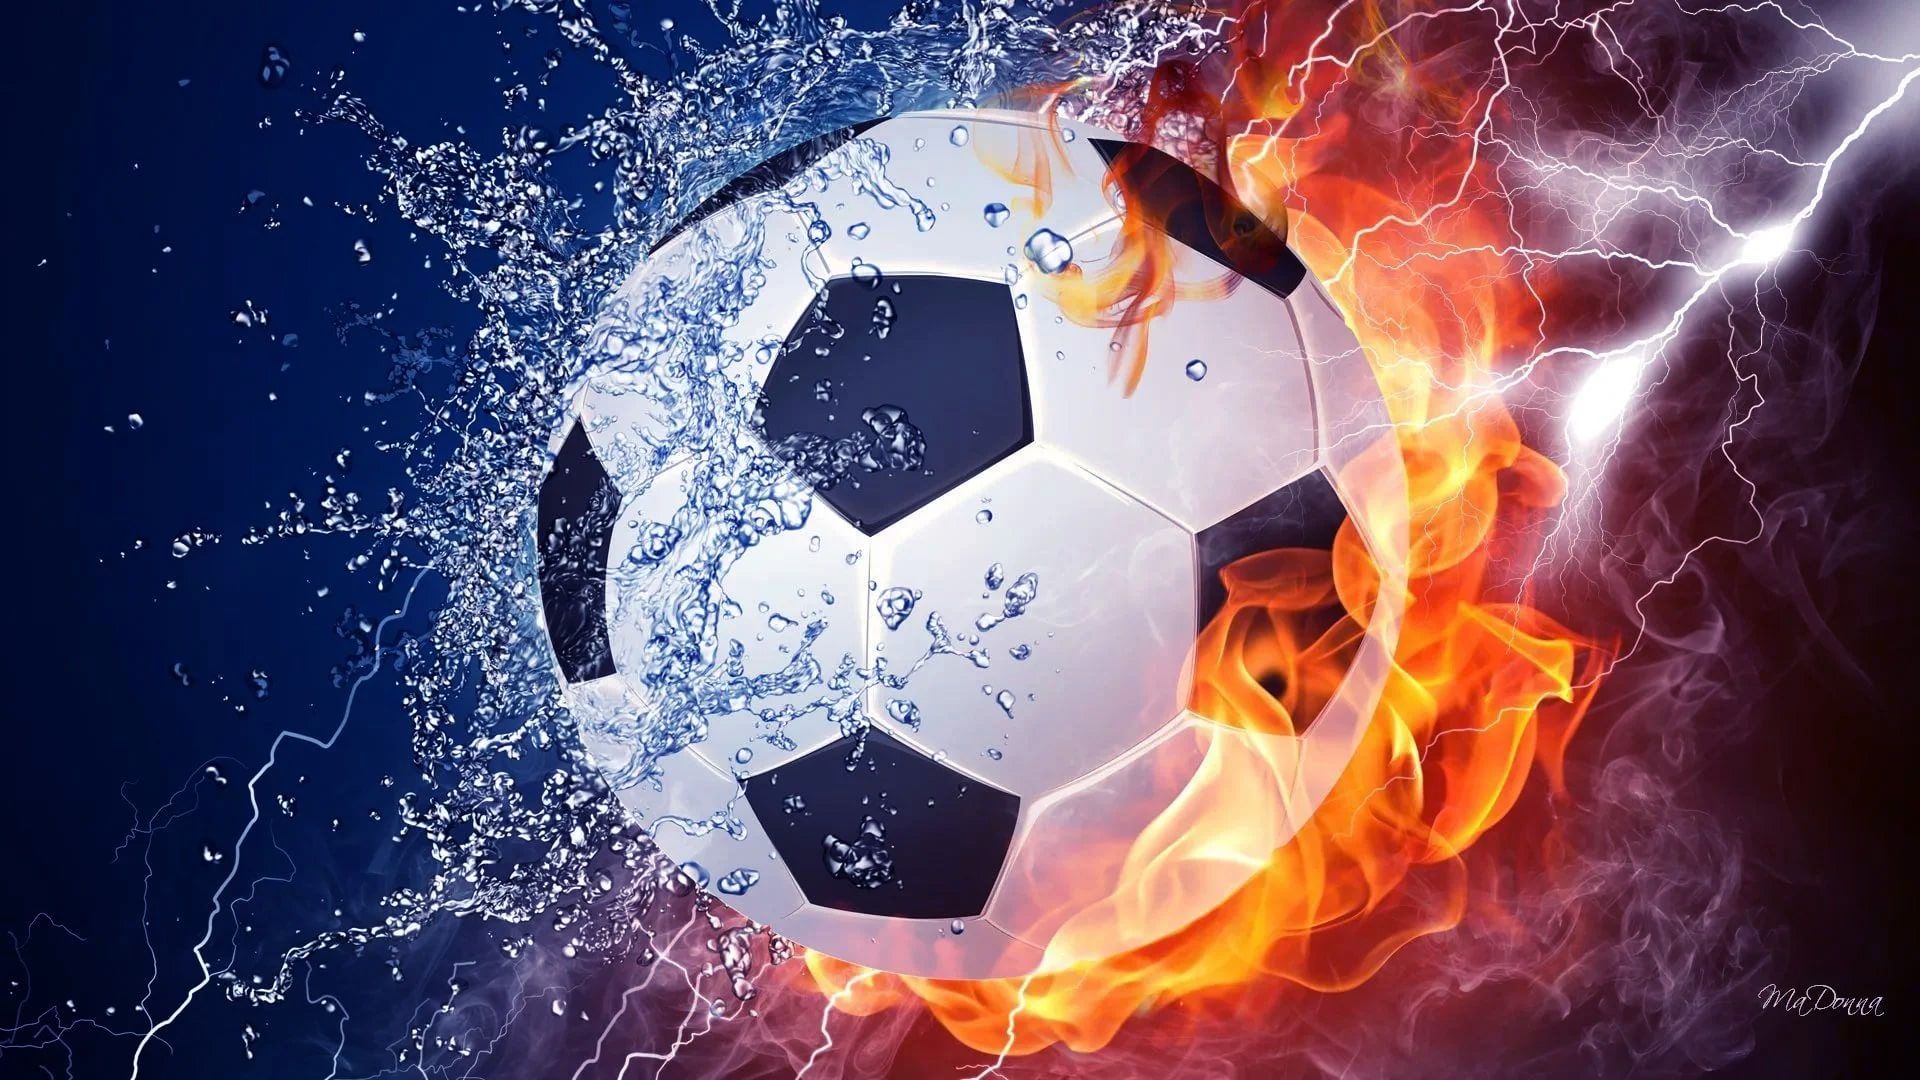 Fire and water soccer ball wallpaper - Soccer